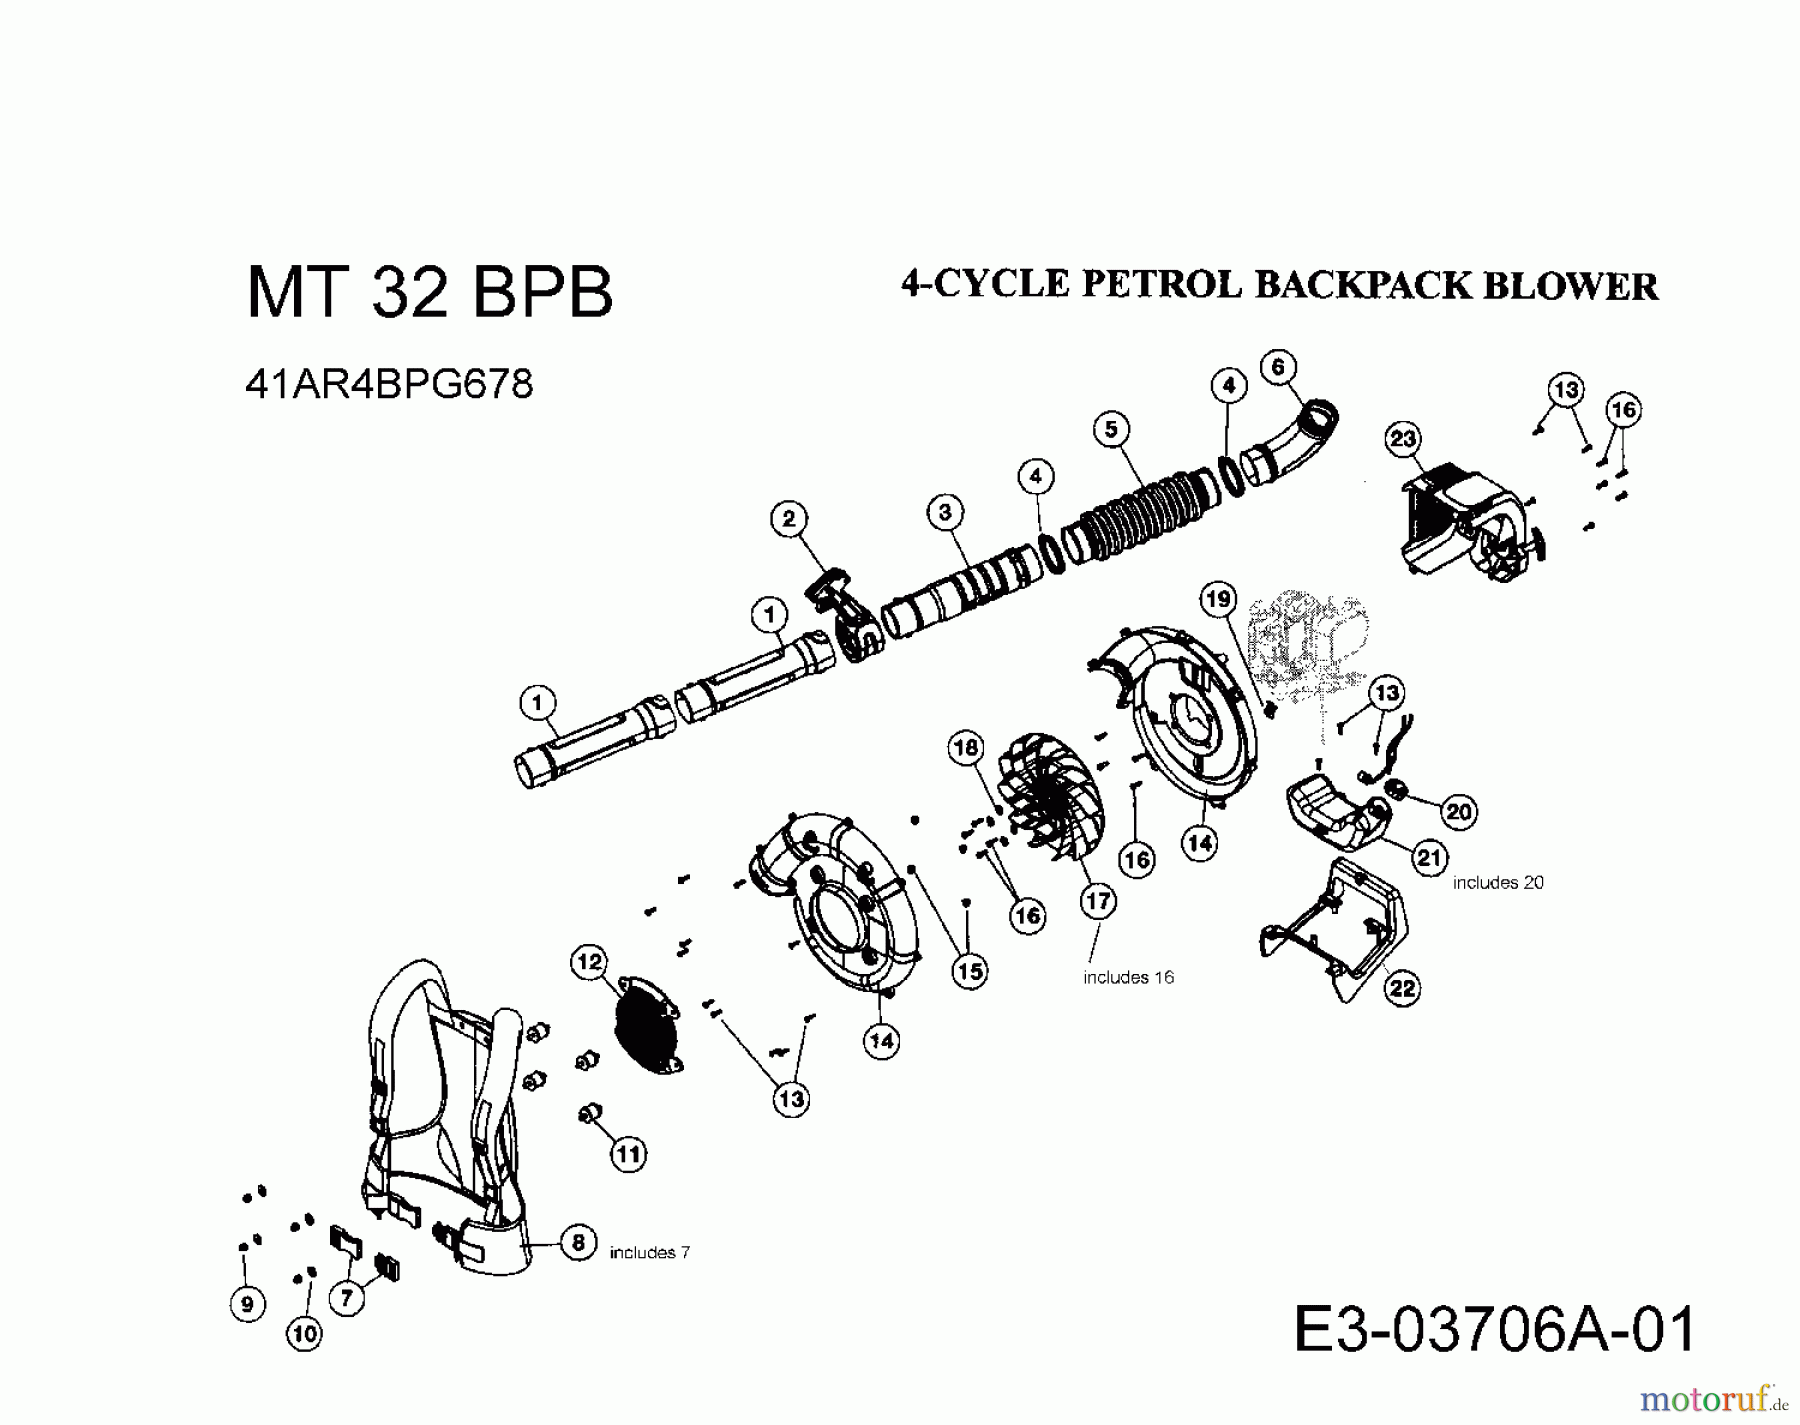  MTD Leaf blower, Blower vac MT 32 BPB 41AR4BPG678  (2008) Basic machine